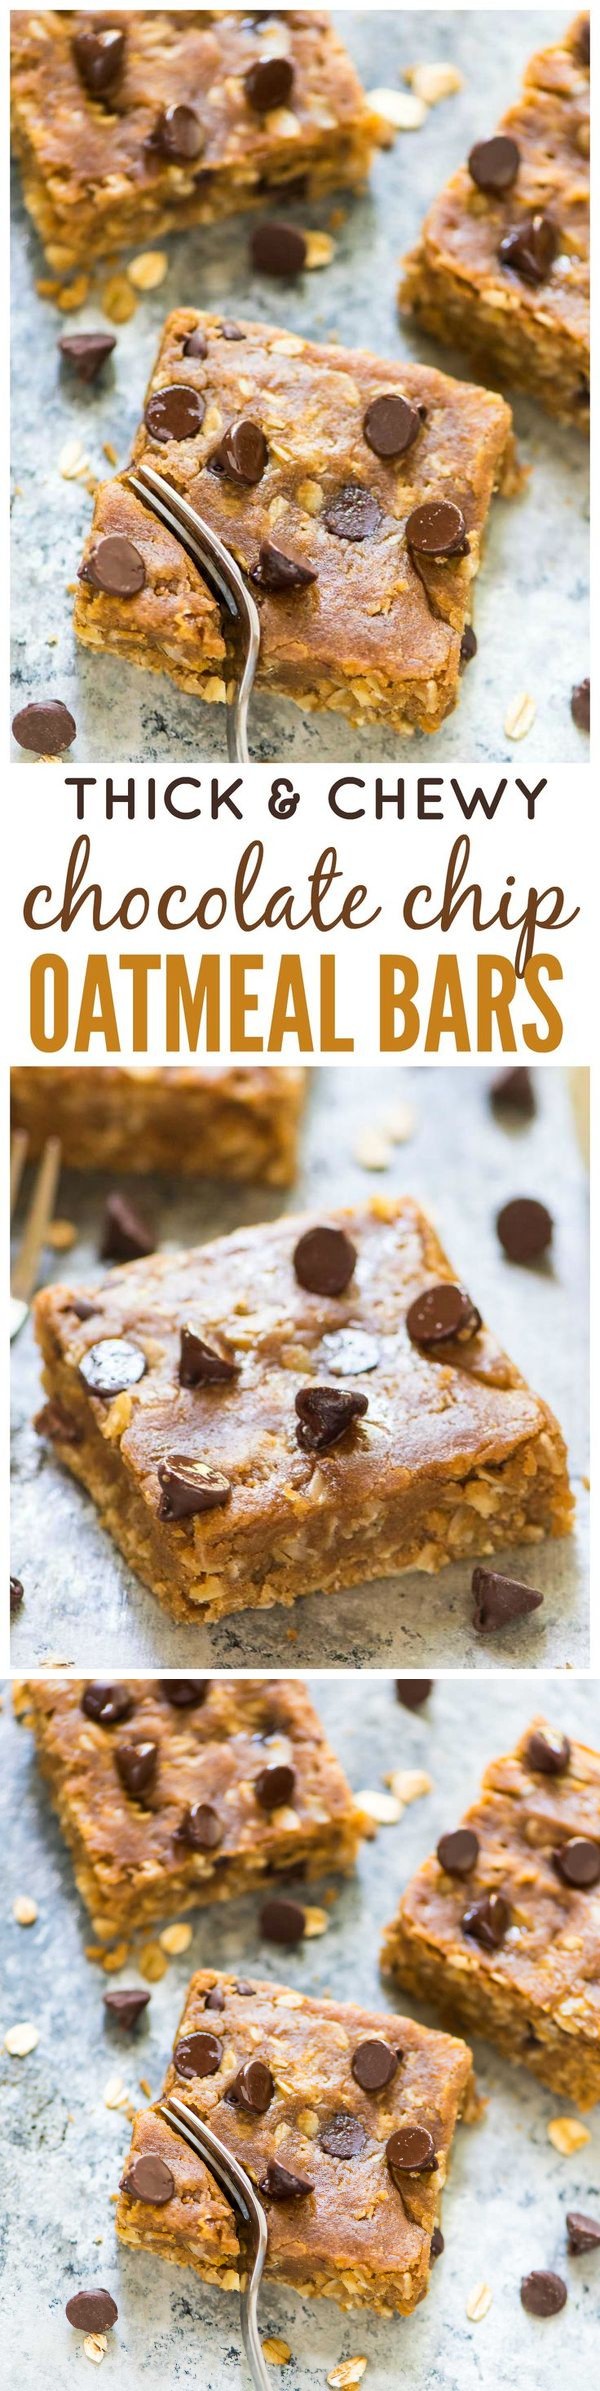 Healthy Oatmeal Chocolate Chip Bars